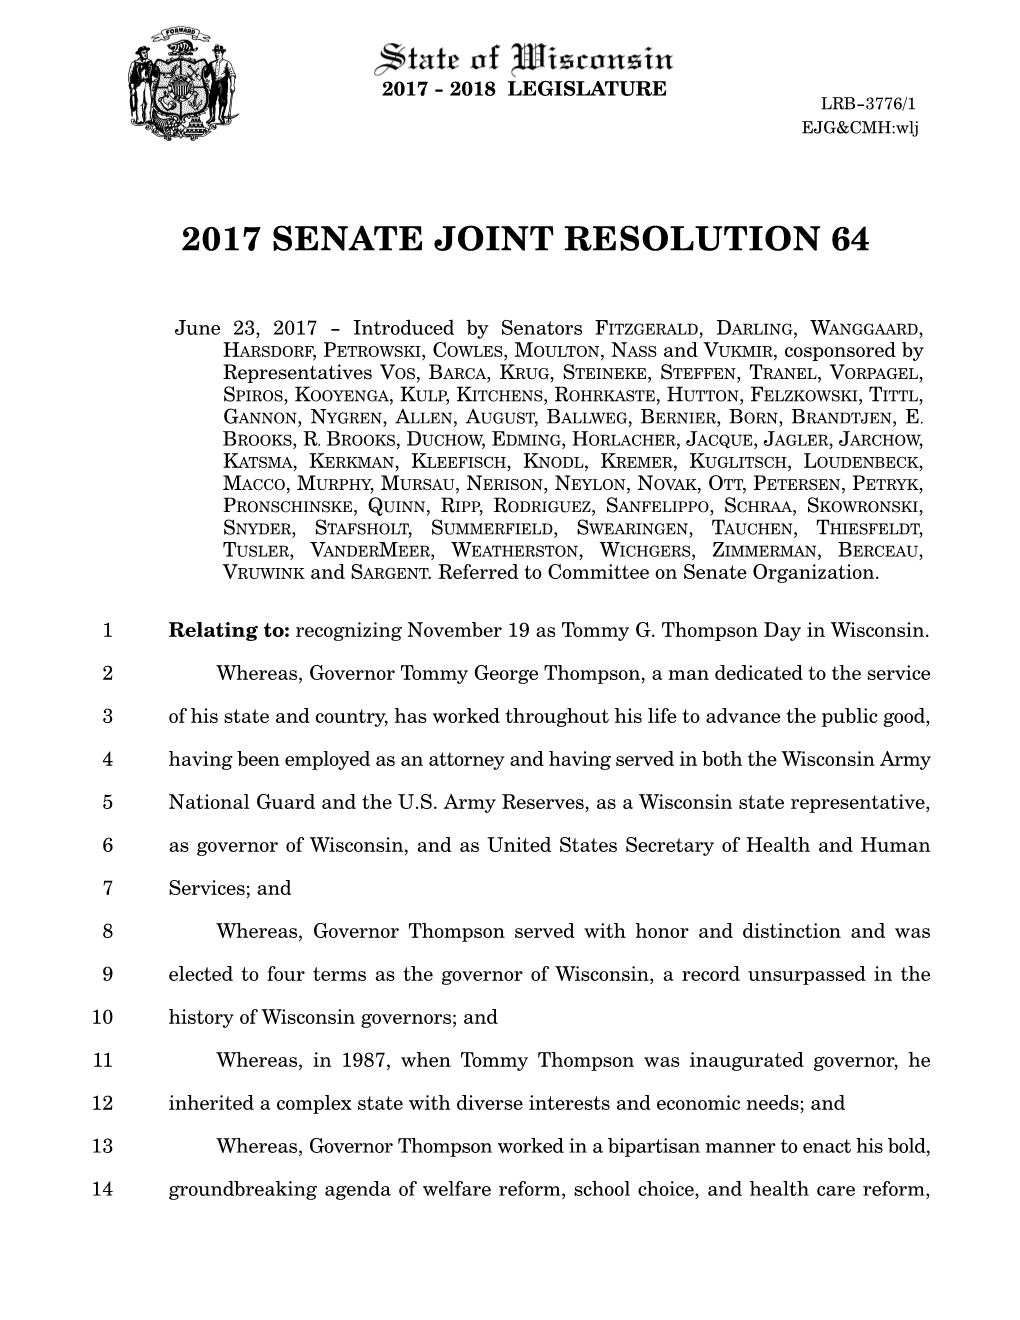 2017 Senate Joint Resolution 64